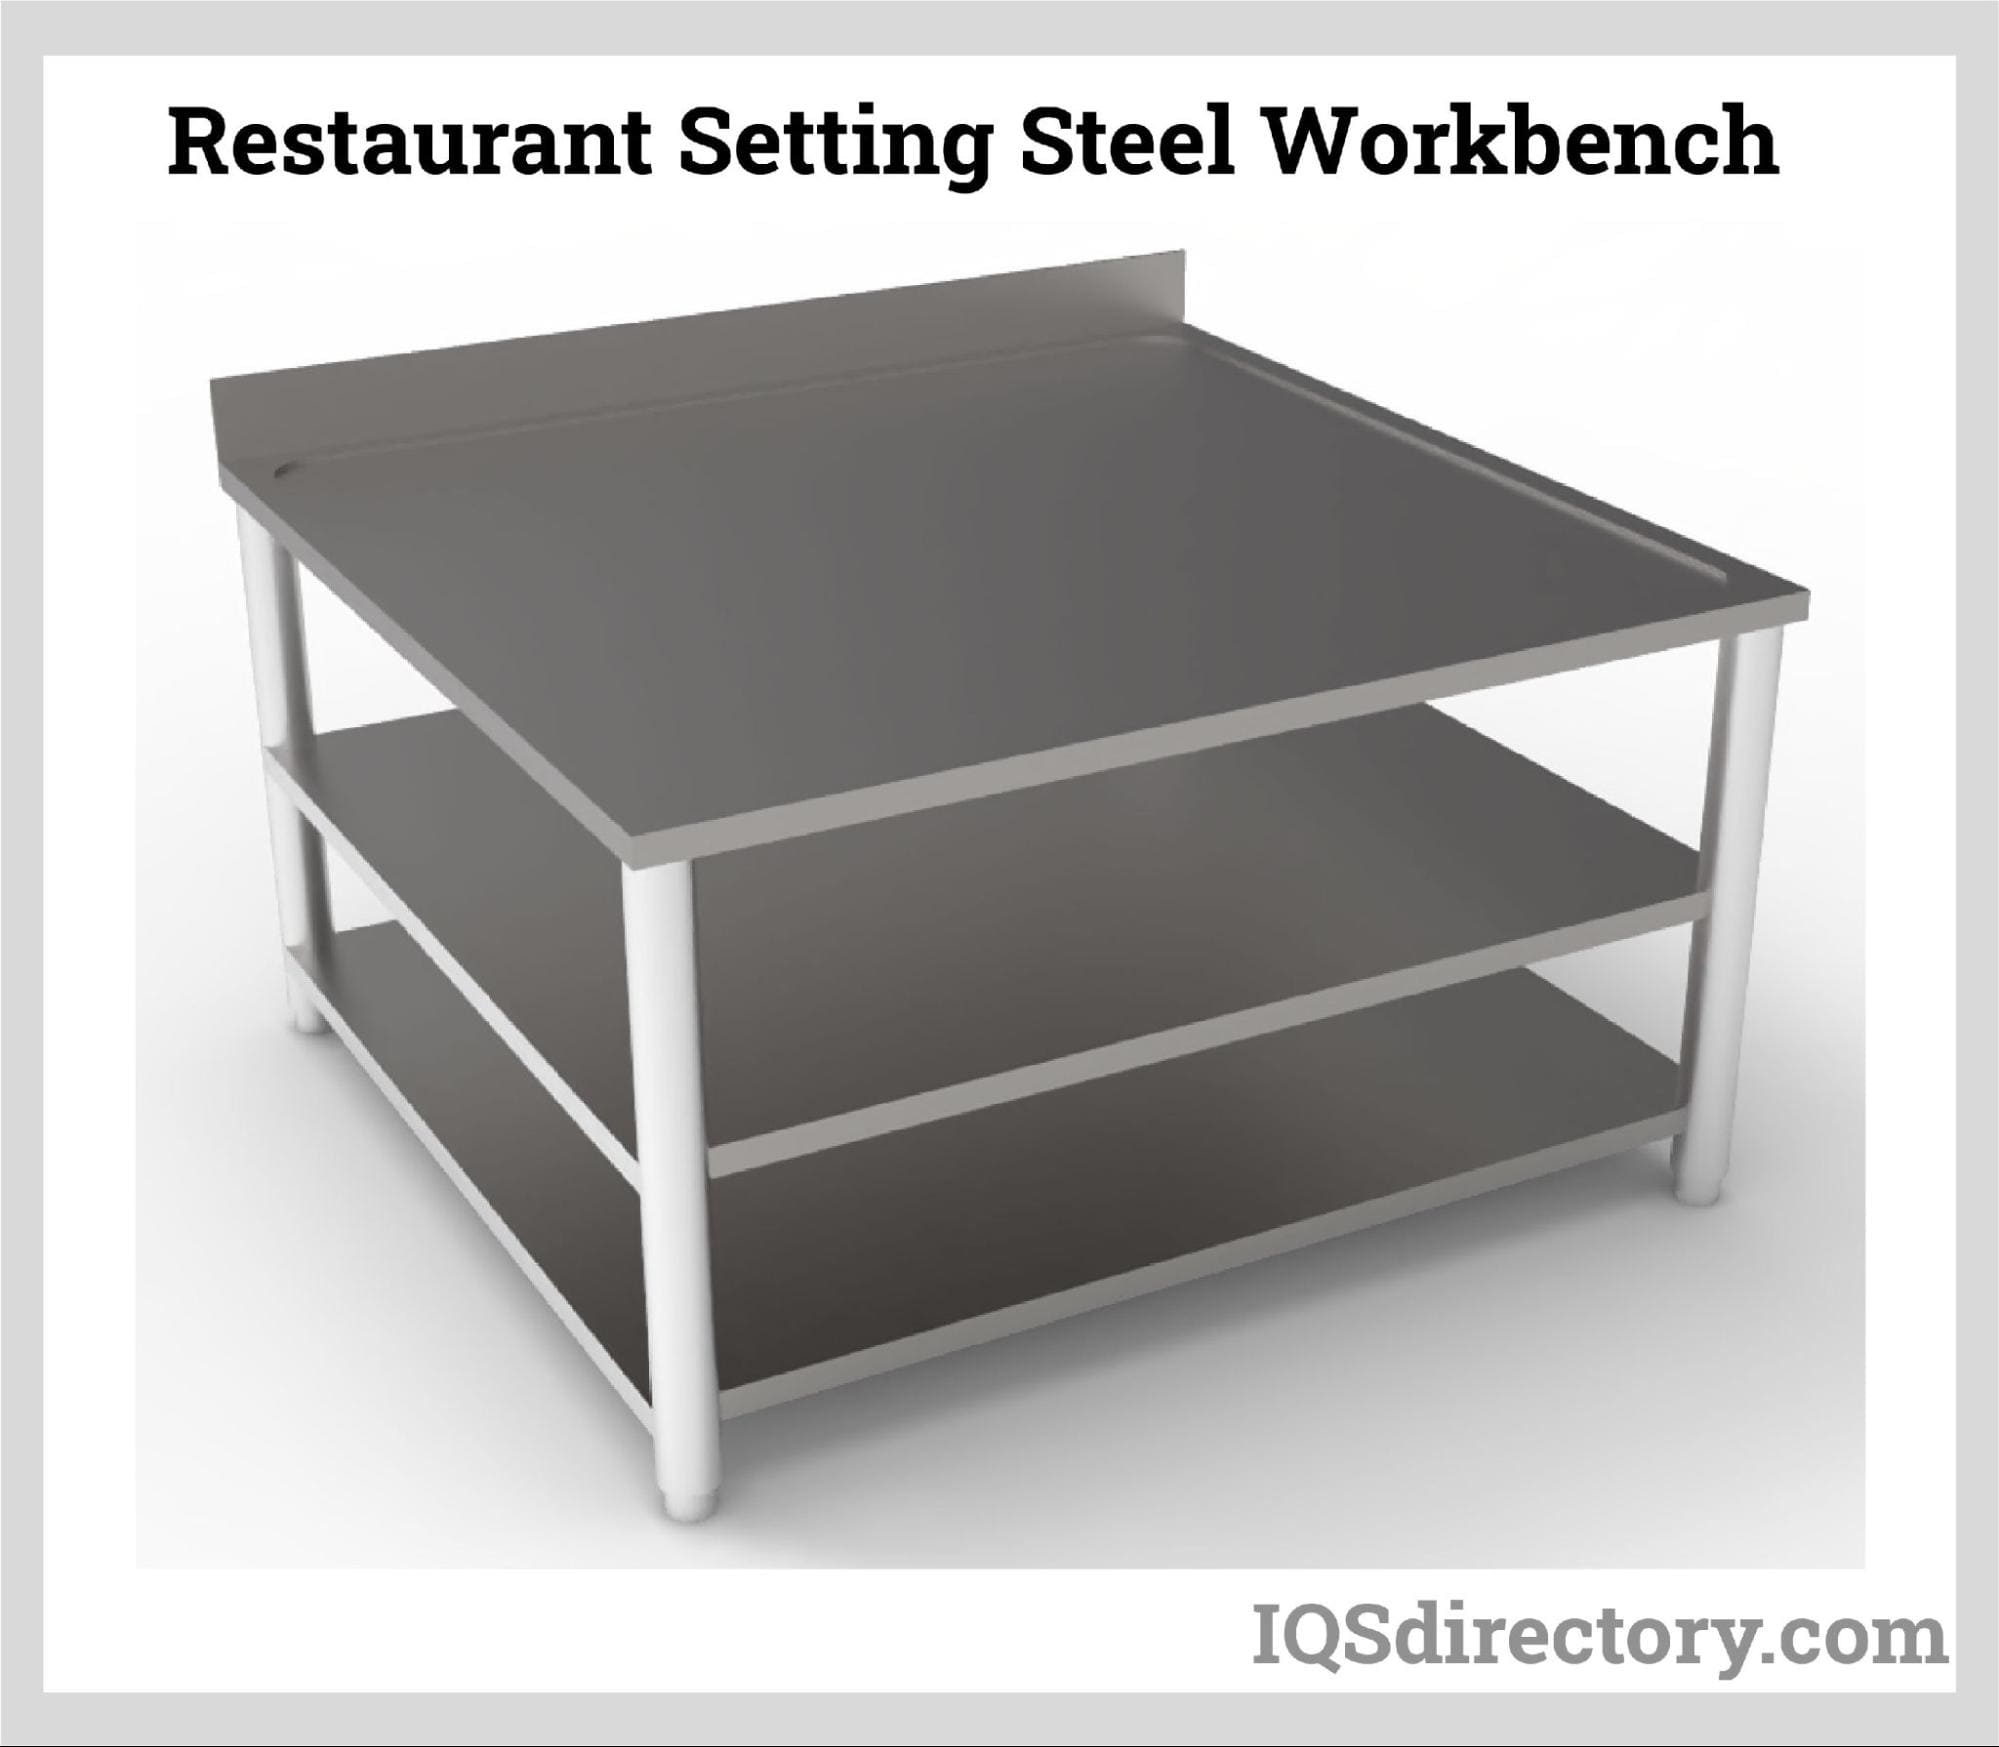 Restaurant Setting Steel Workbench